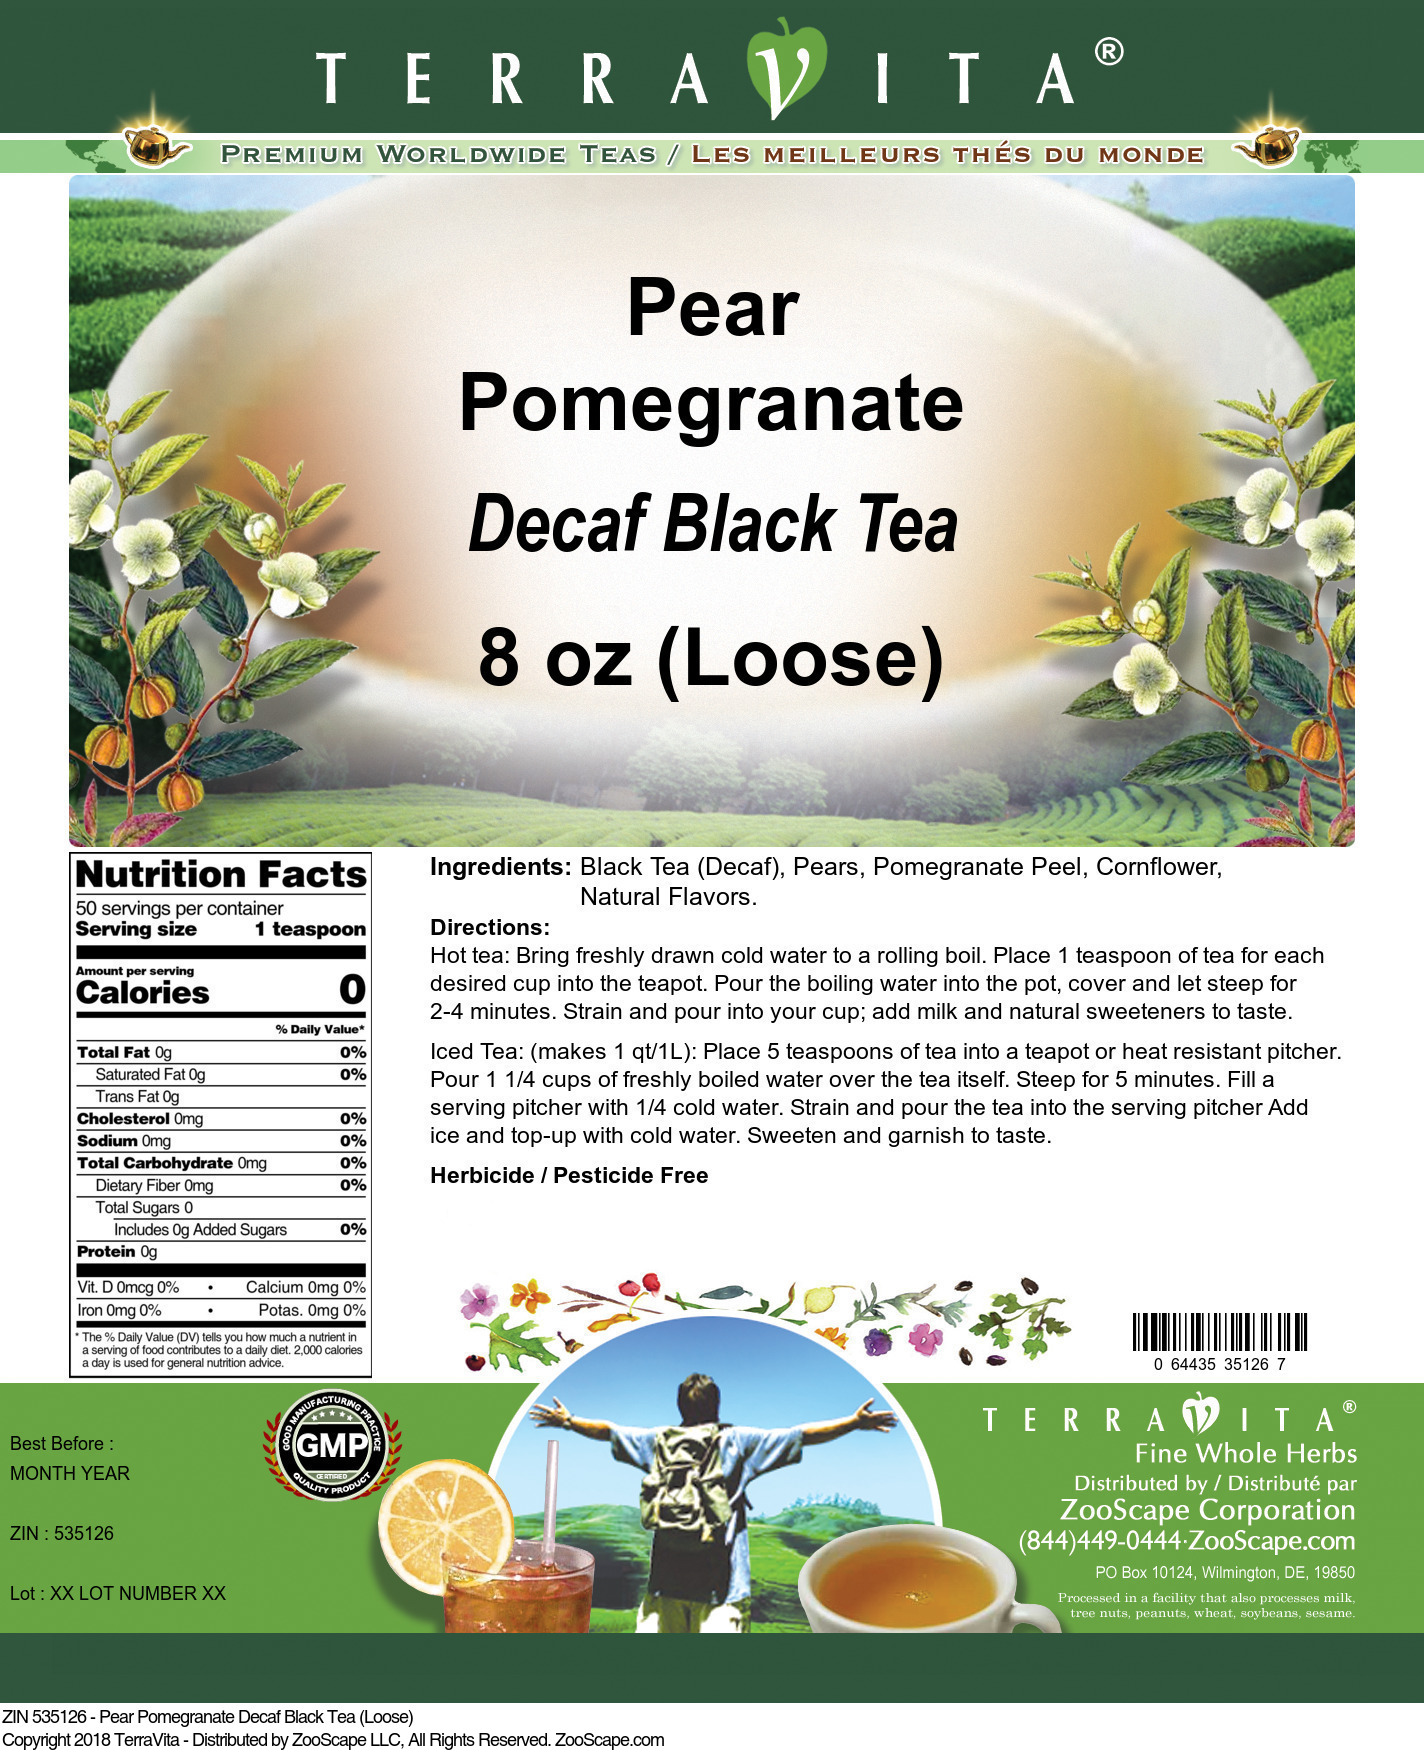 Pear Pomegranate Decaf Black Tea (Loose) - Label